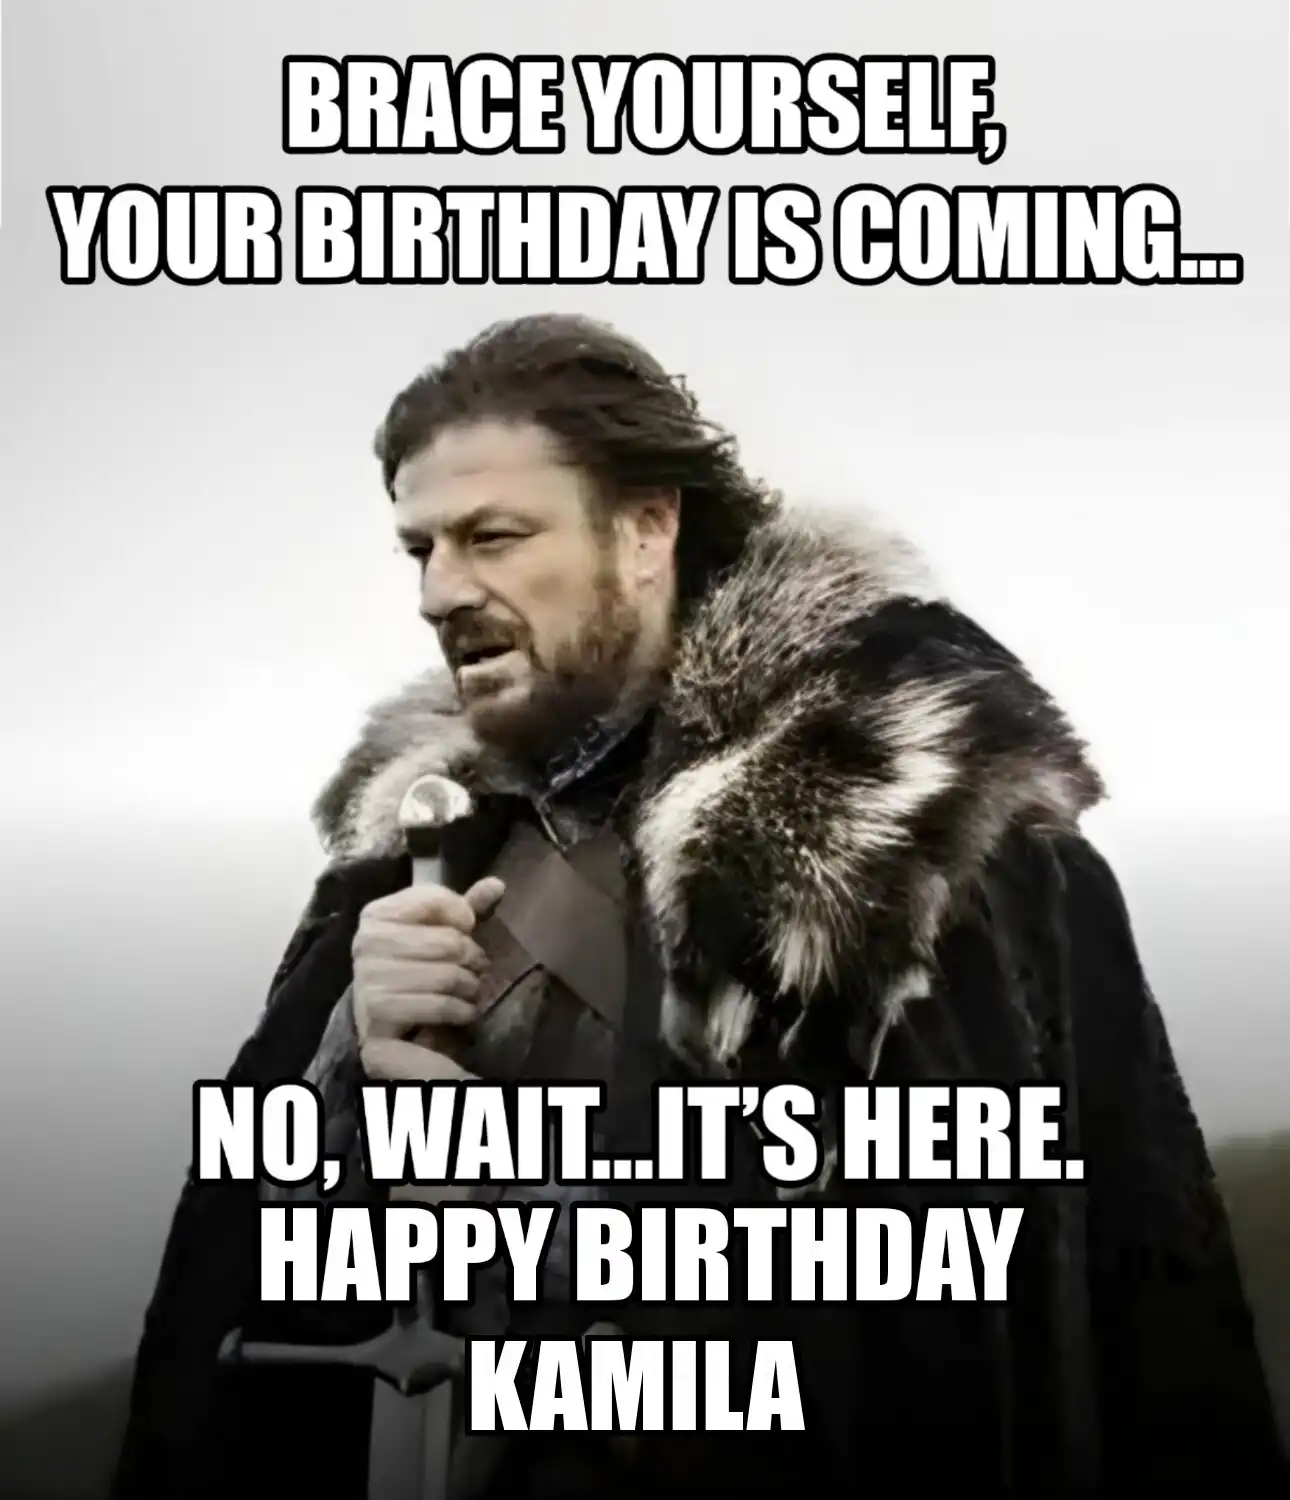 Happy Birthday Kamila Brace Yourself Your Birthday Is Coming Meme